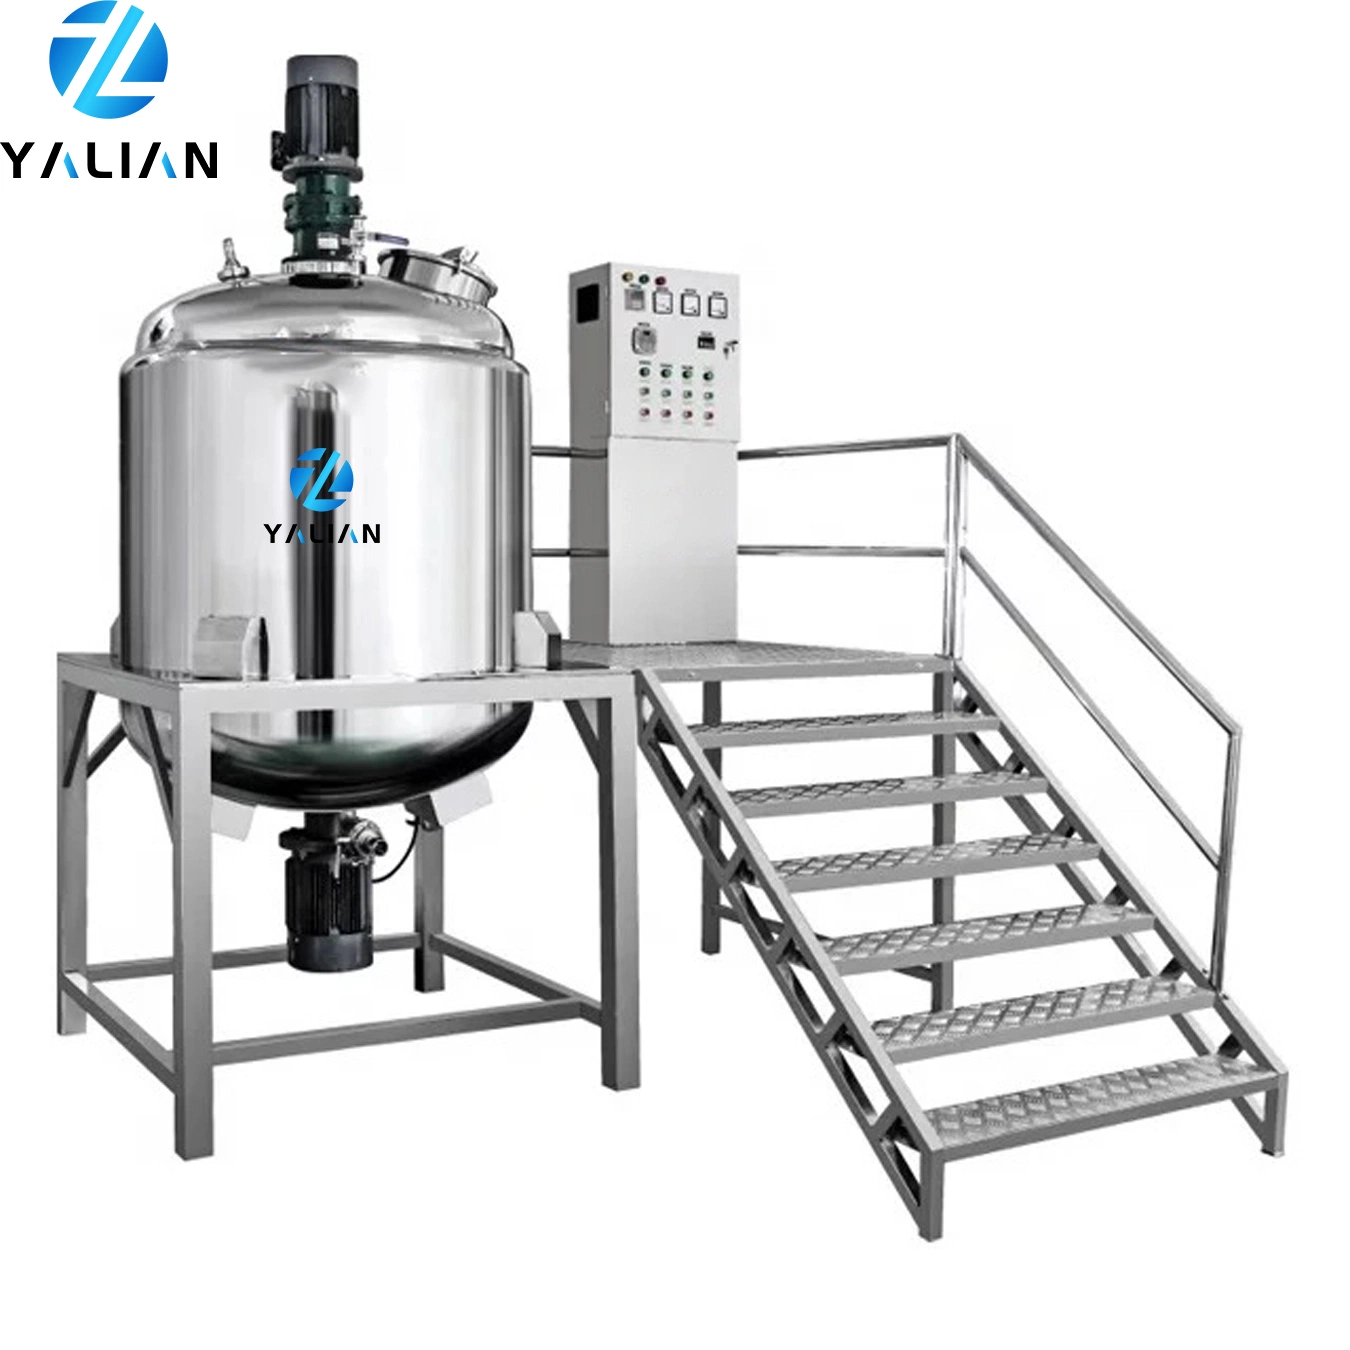 Emulsion Emulsifier, Chemical Machinery Equipment, Vacuum Homogenizing Emulsifier Machine